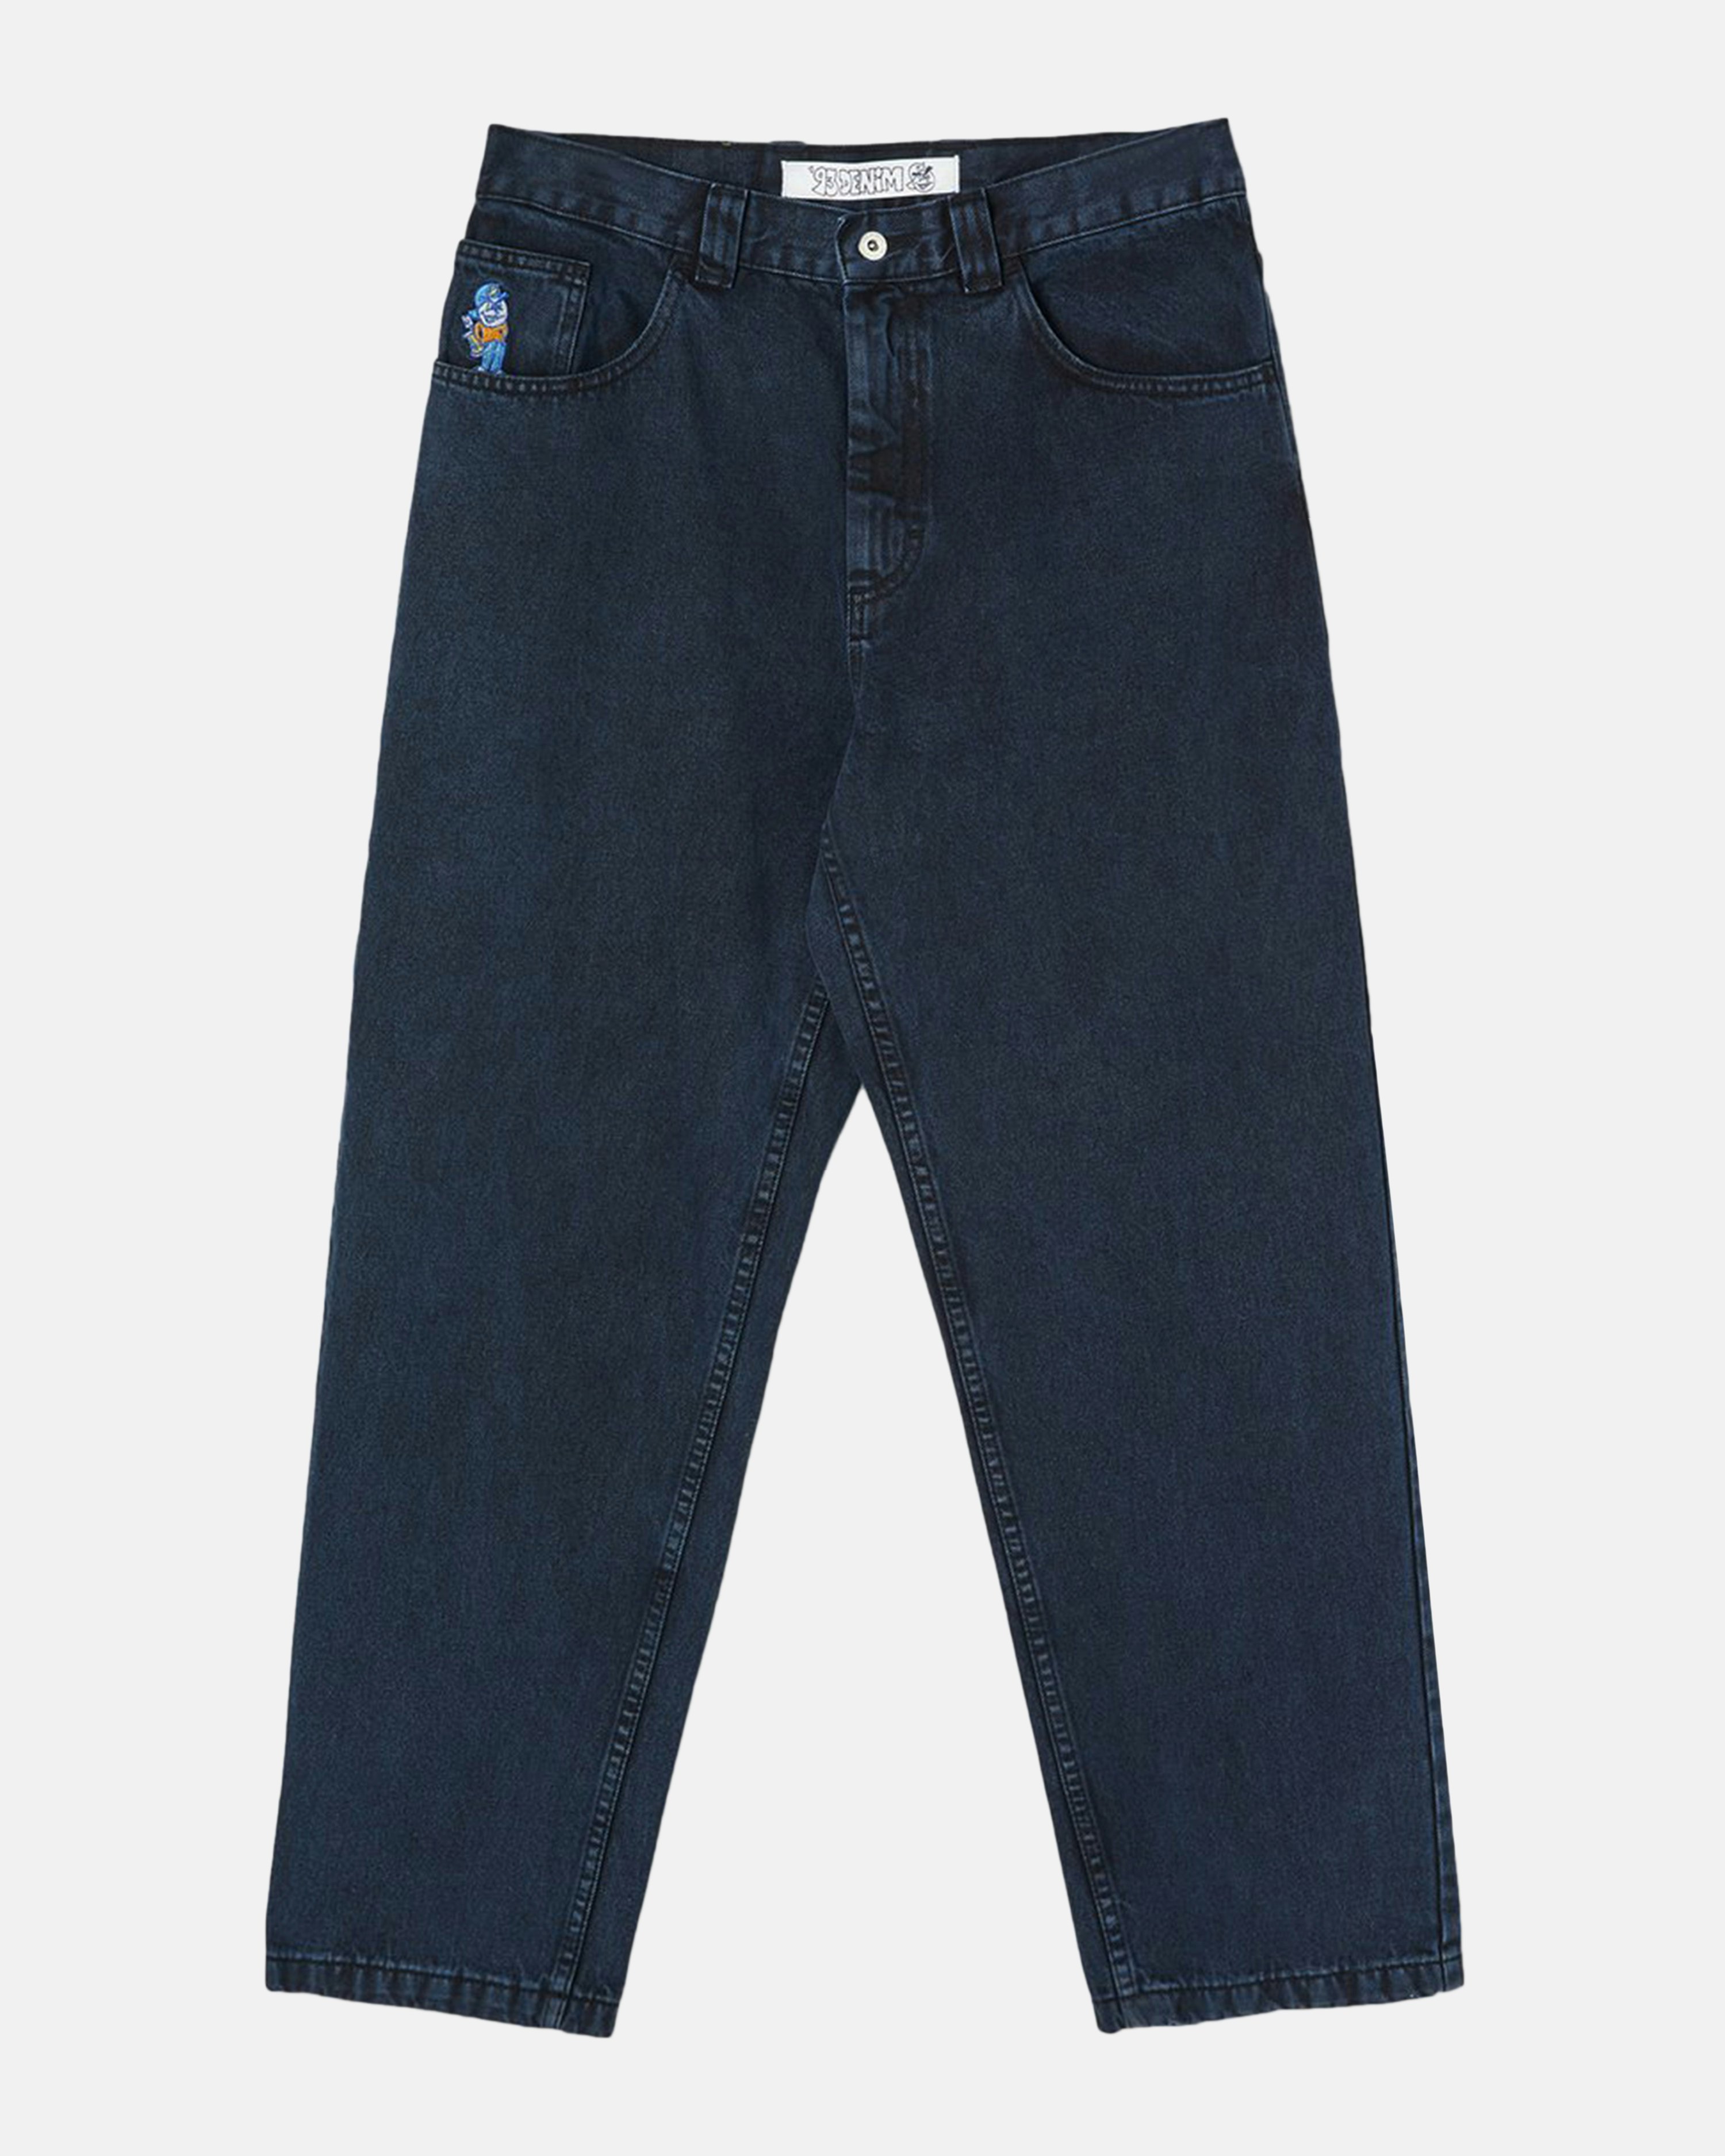 Polar Skate Co. Jeans - 93 Denim Blue | Unisex | Junkyard